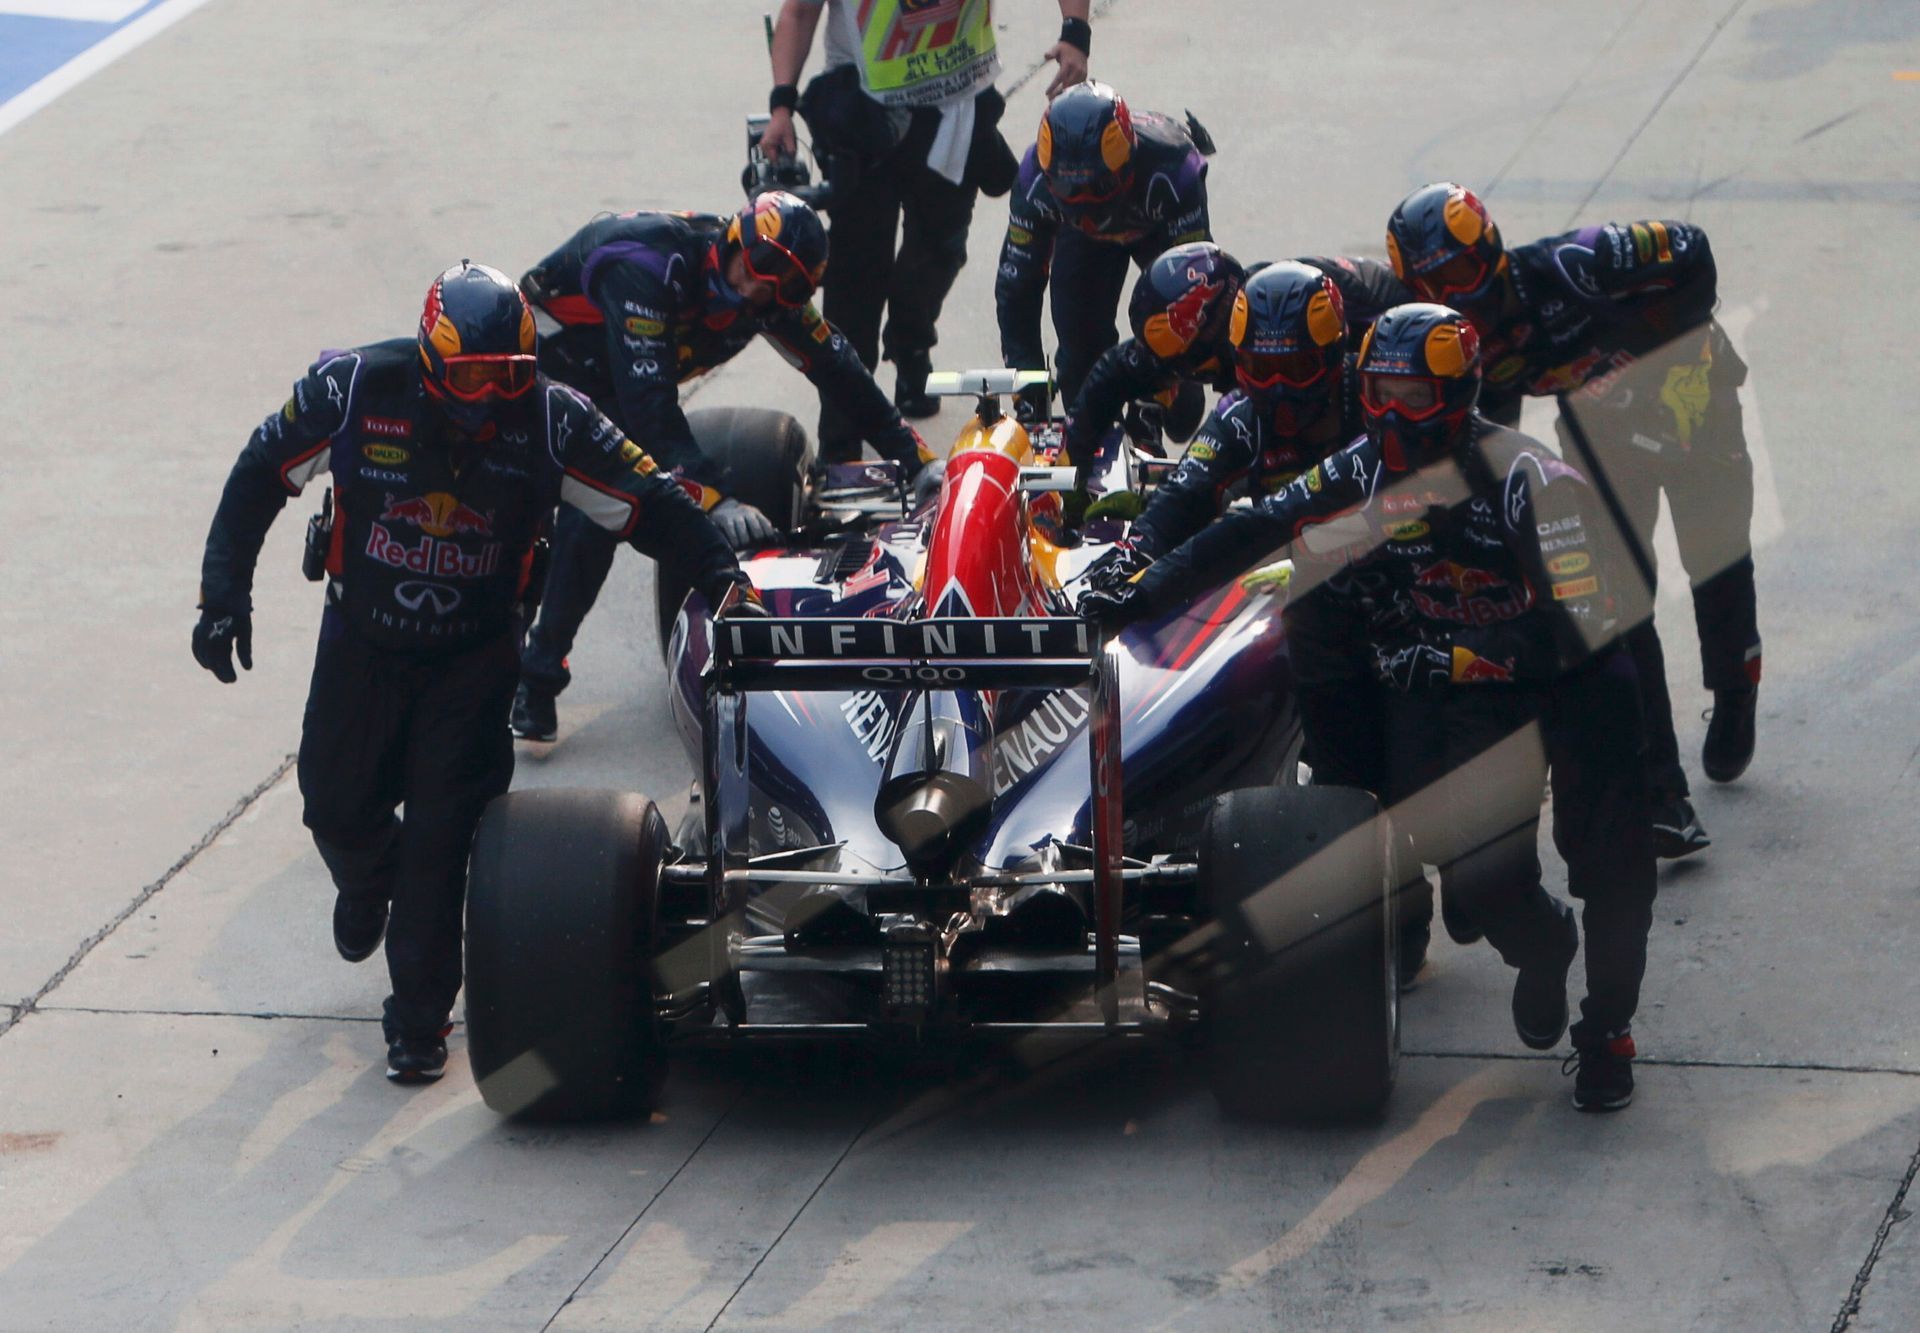 Red Bull Formula One driver Ricciardo has his car pushed back in the pit lane during the Malaysian F1 Grand Prix at Sepang International Circuit outside Kuala Lumpur